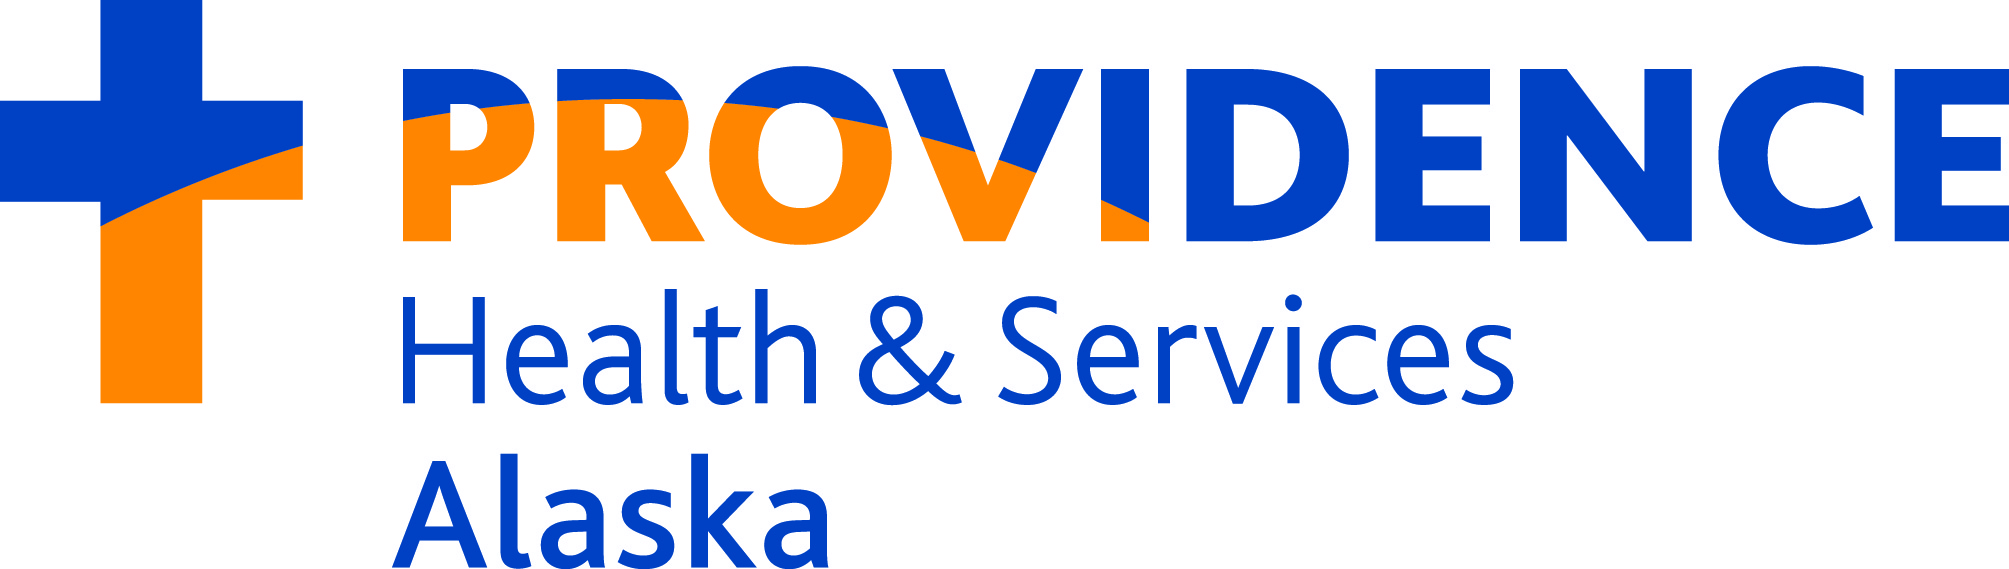 Providence Health & Services Alaska